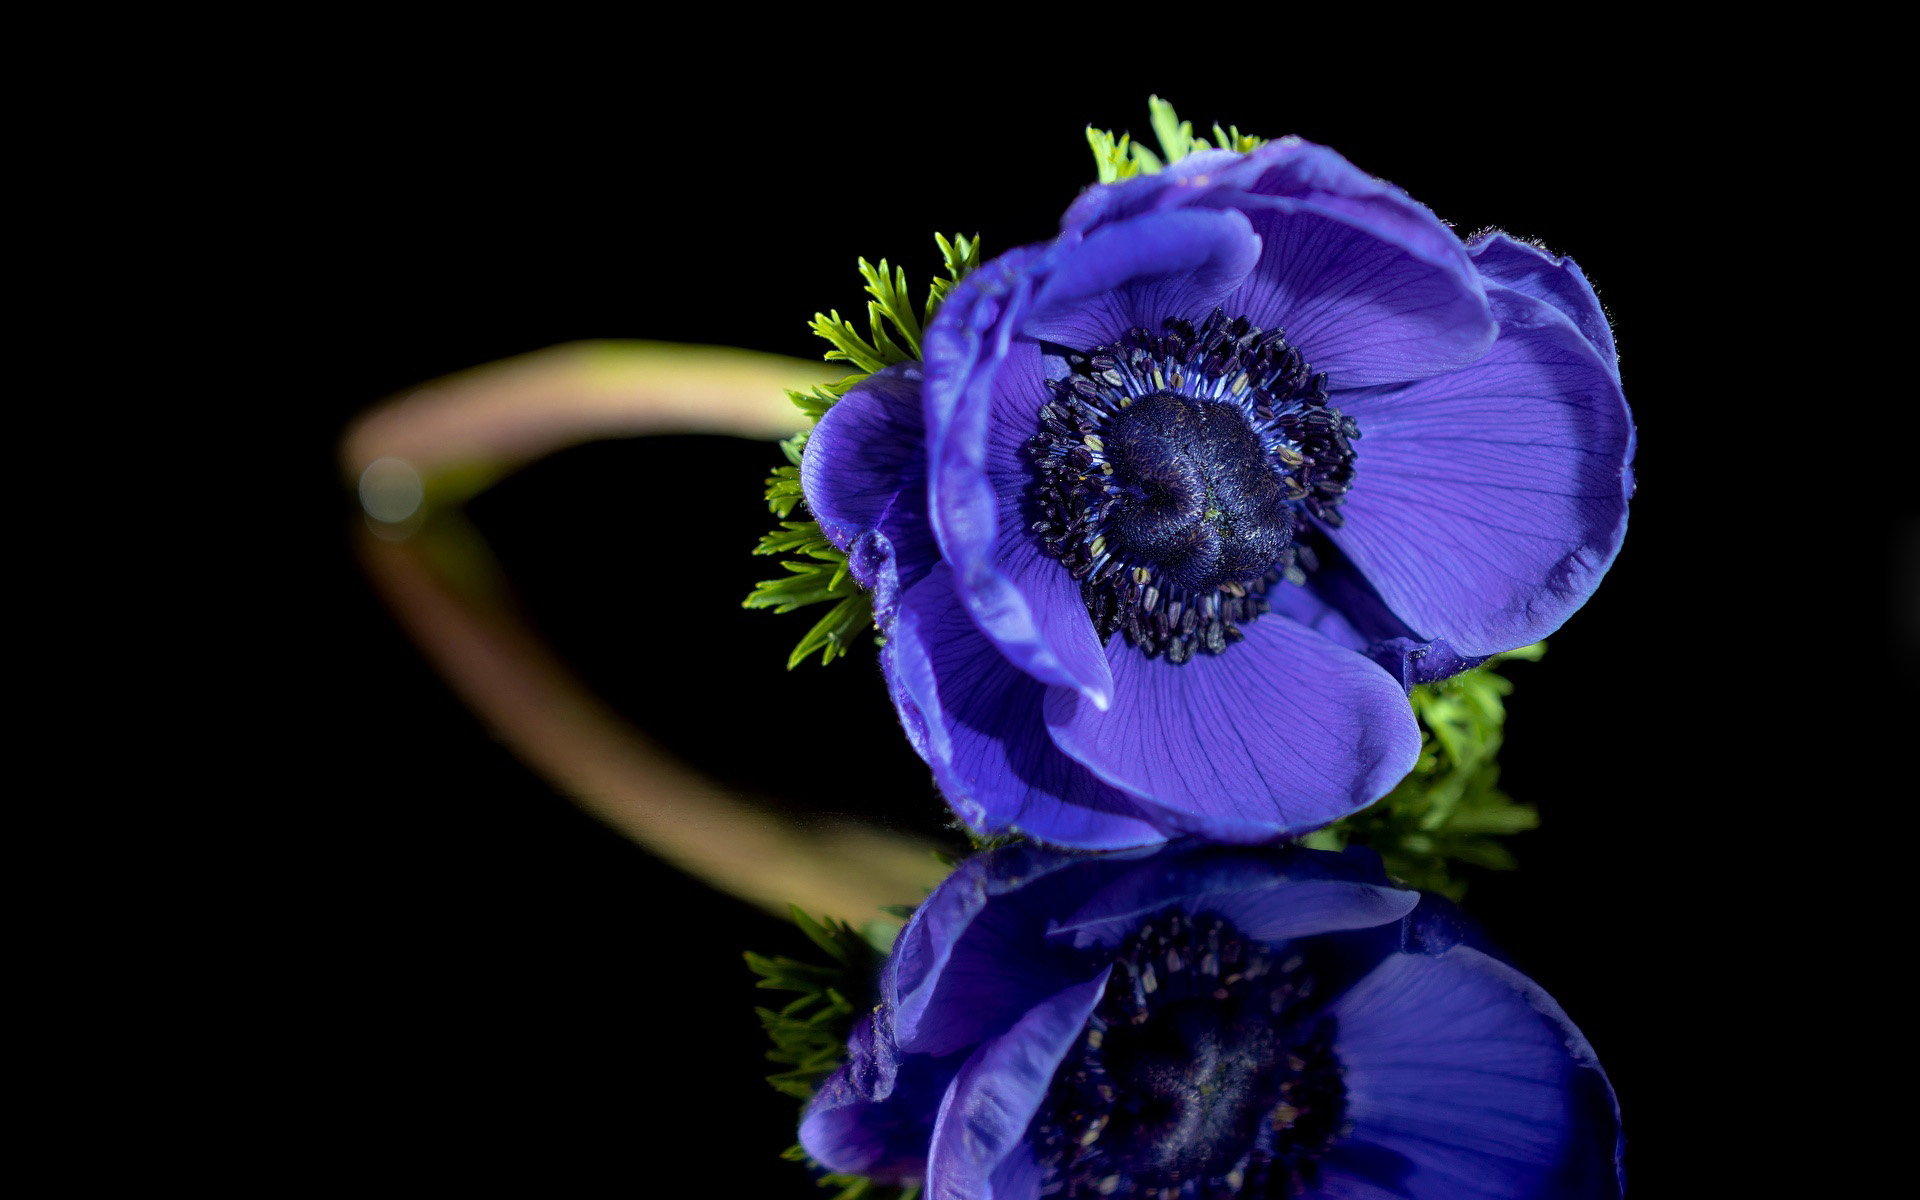 Anemone hd reflection blue flower flower